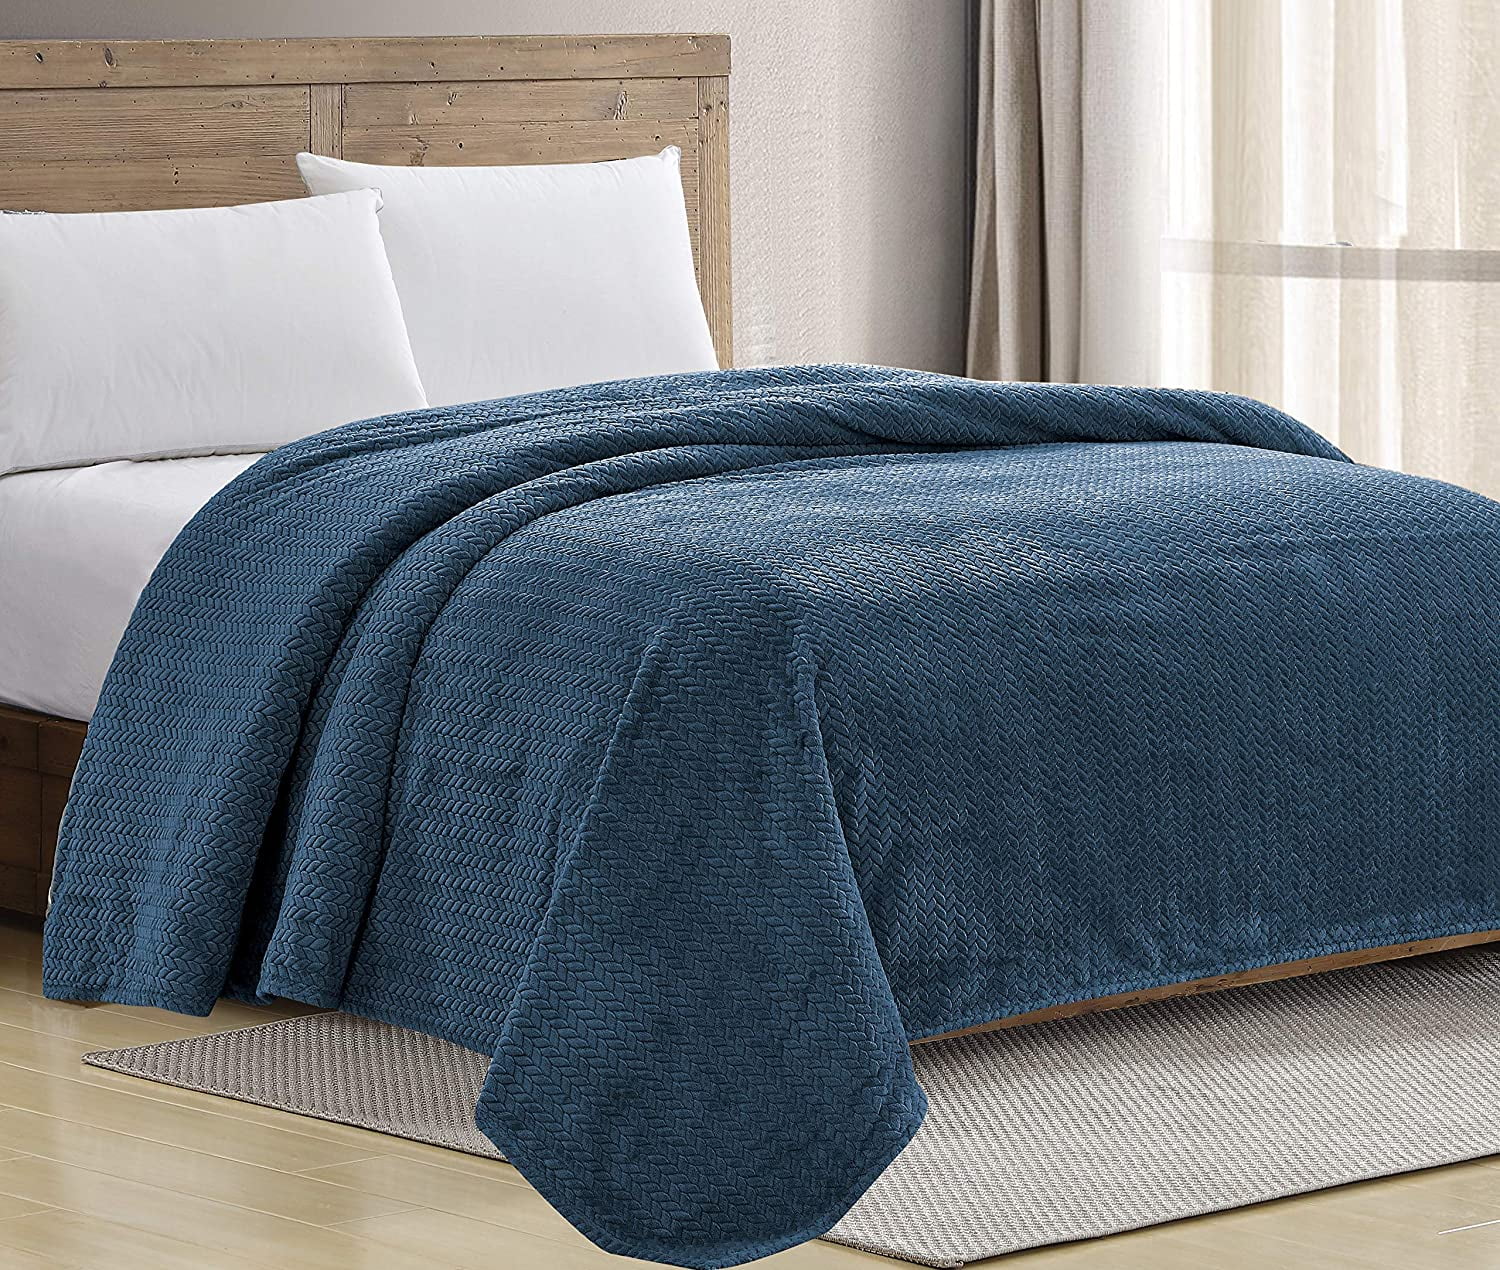 Chevron Braided Blanket 108, King Size Bed Blanket